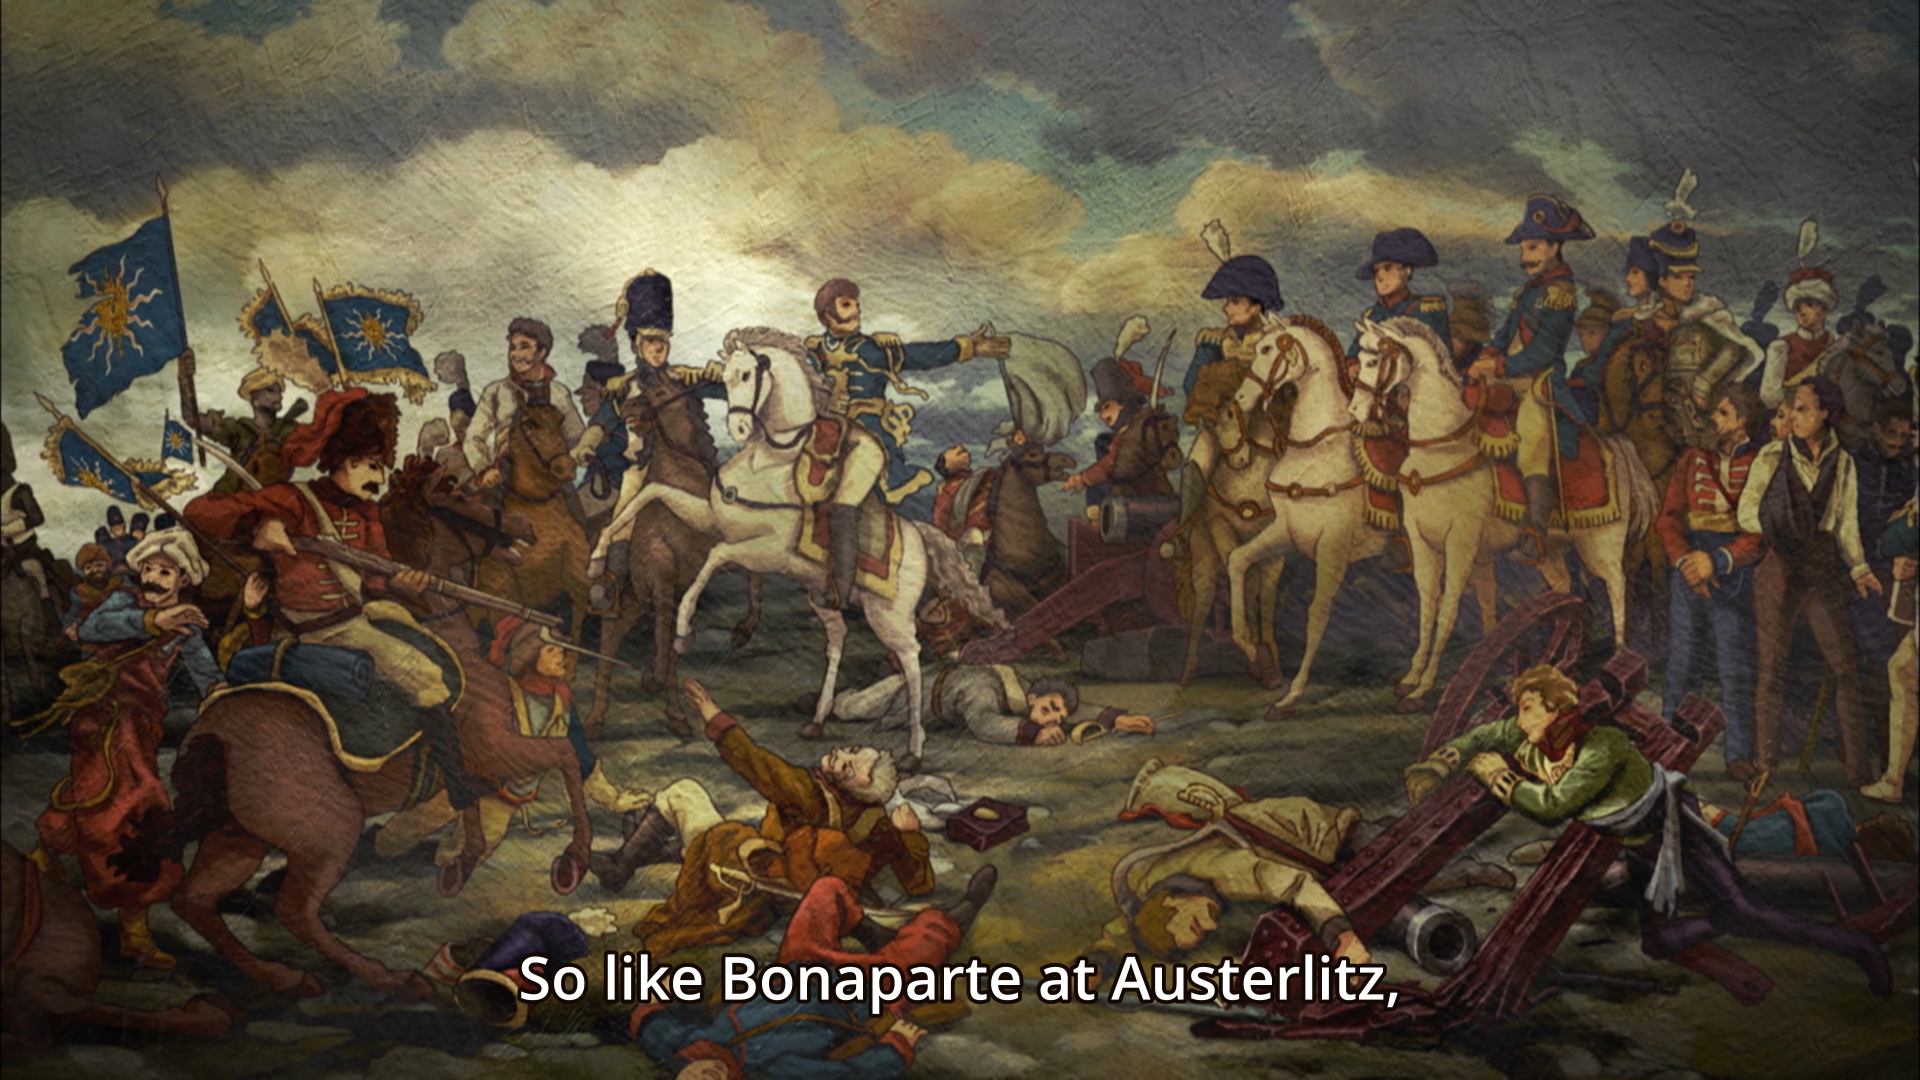 Военный совет перед аустерлицем. Наполеон при Аустерлице Франсуа. Битва при Аустерлице картина Франсуа Жерара.